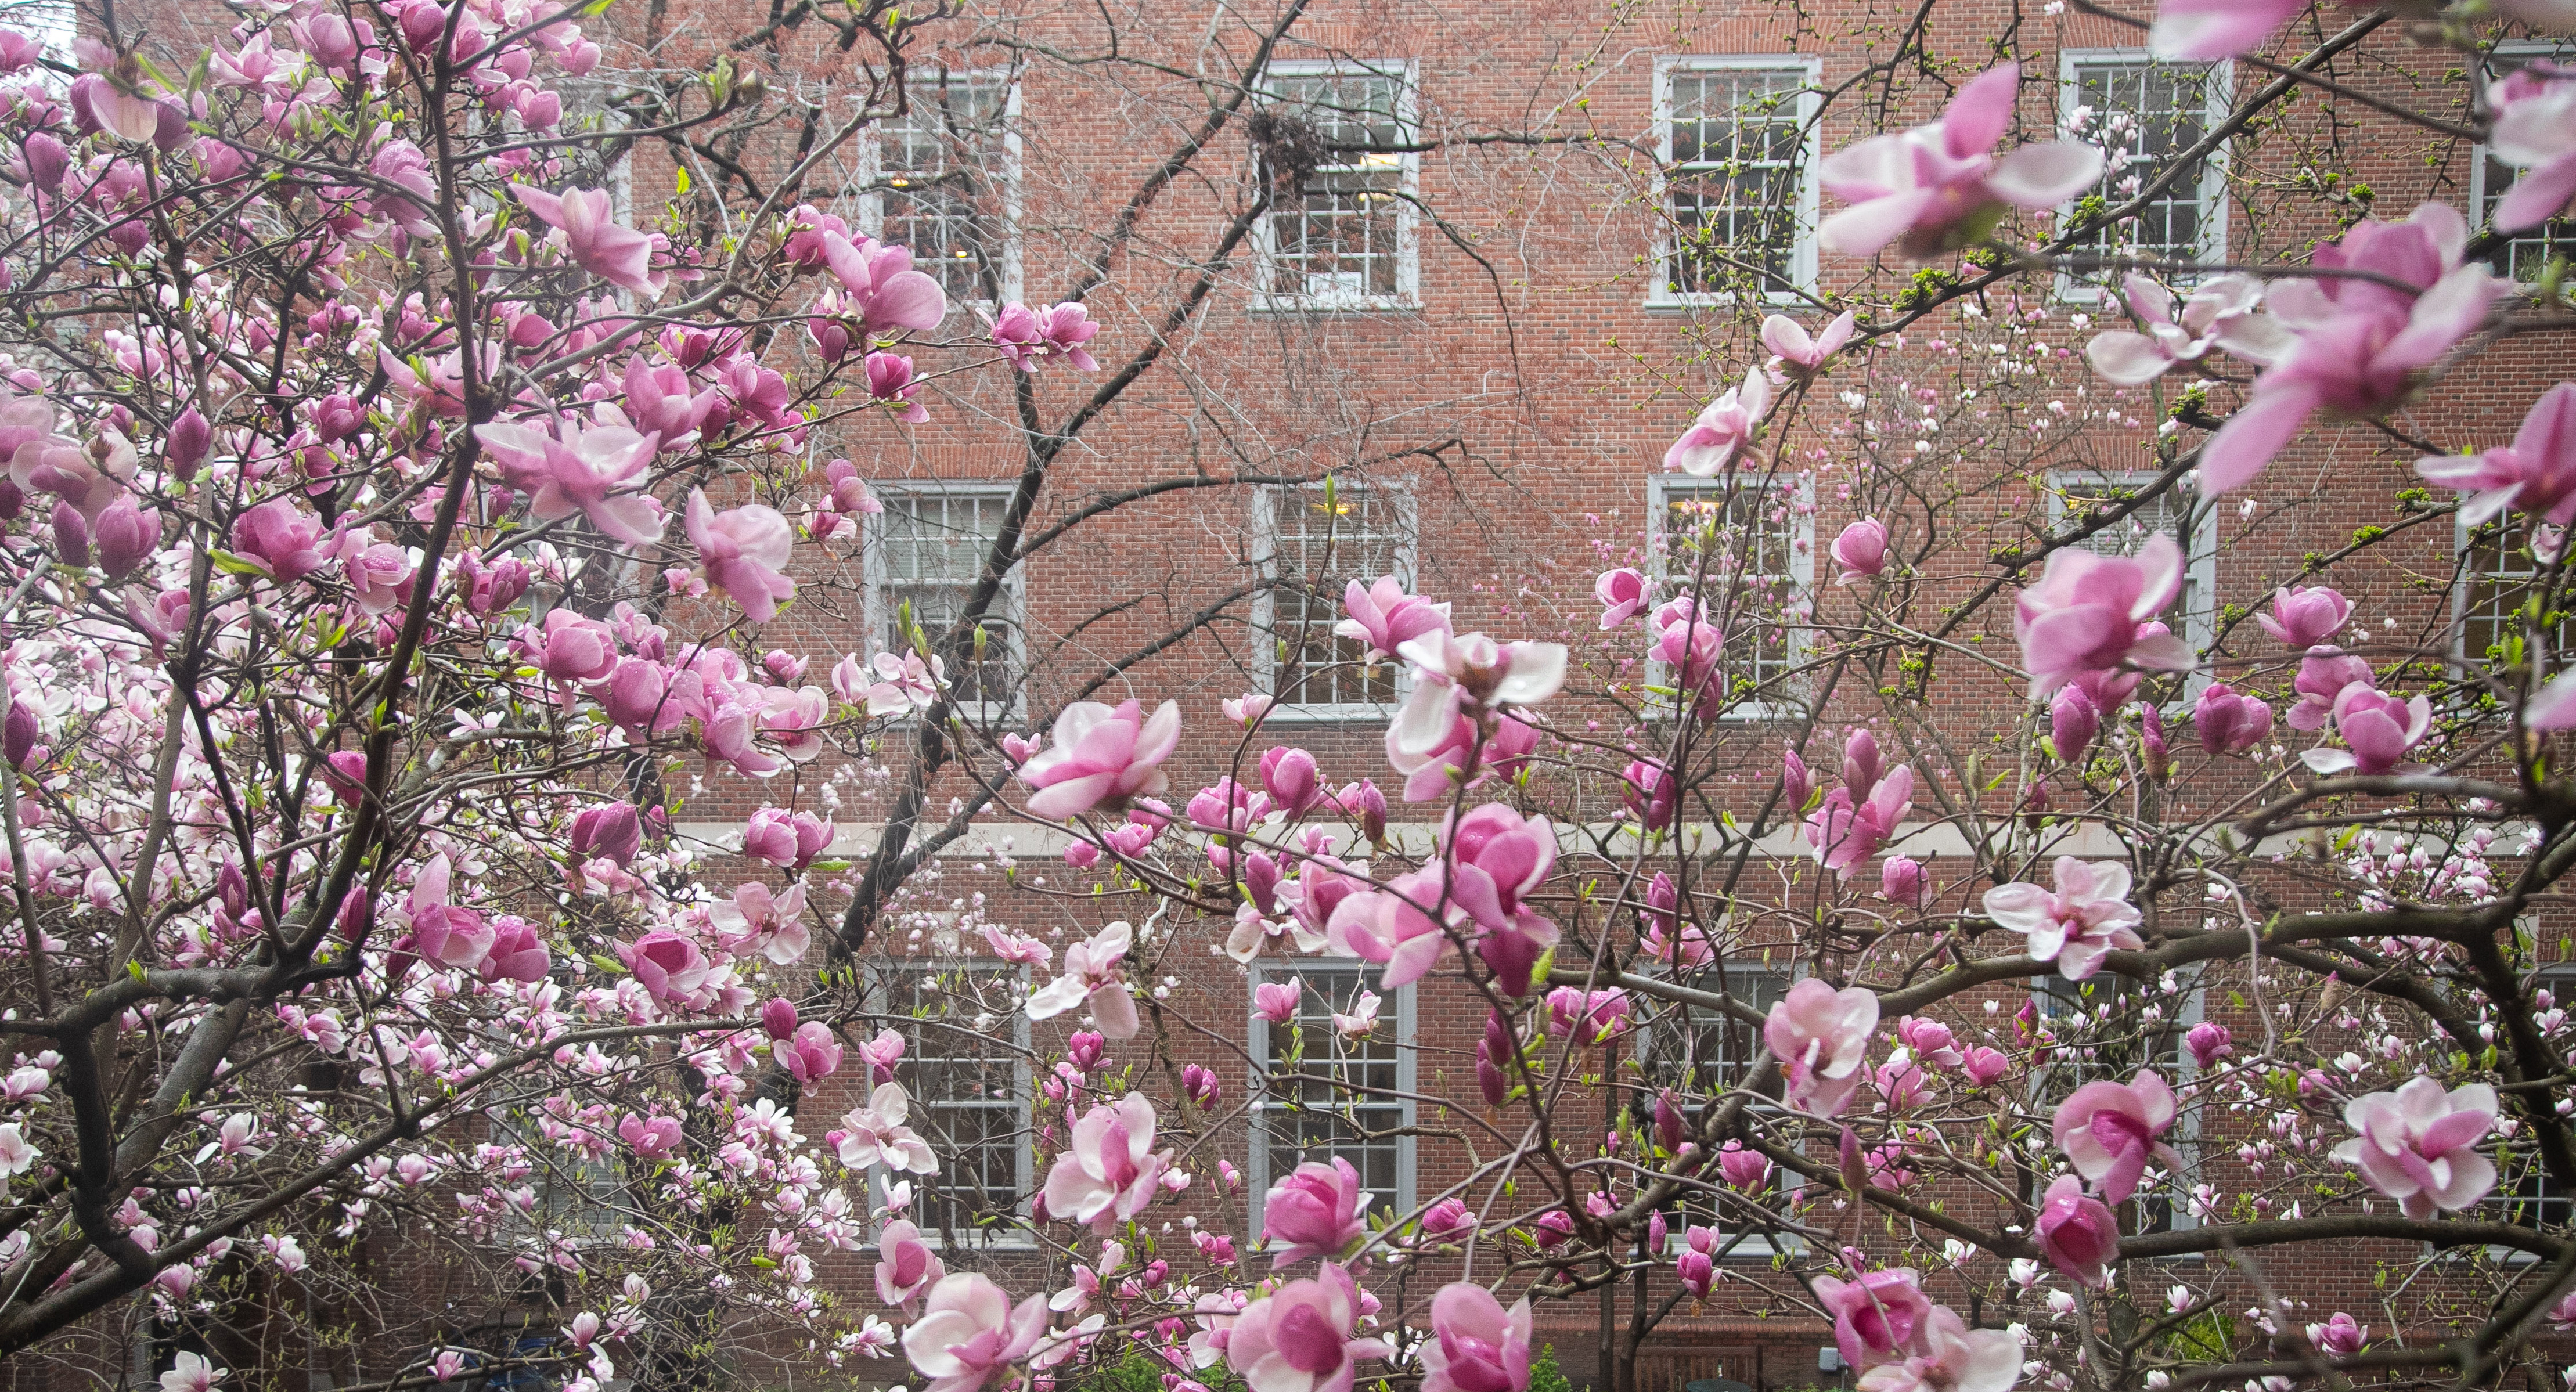 The magnolia trees in full bloom in Vanderbilt Hall Courtyard